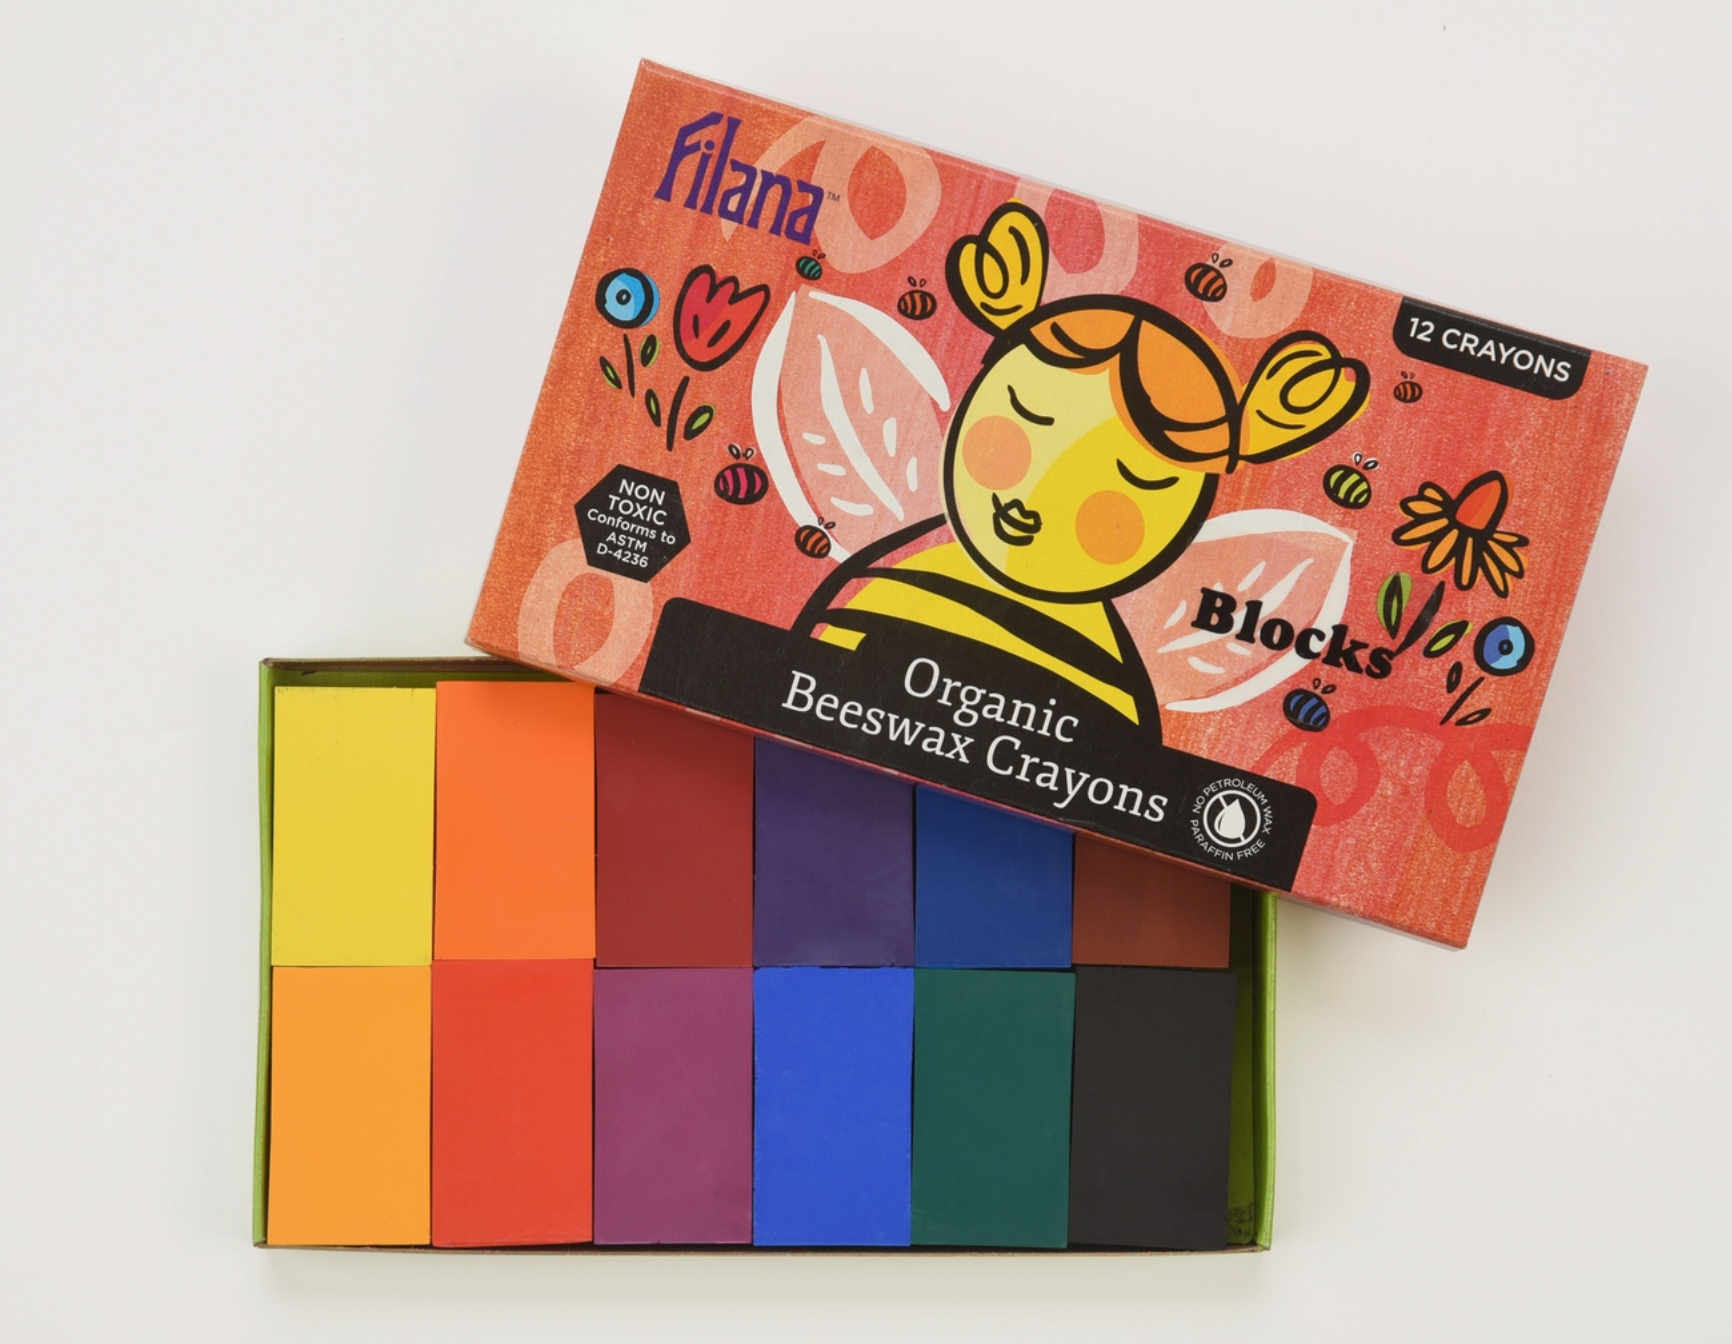 9-Piece Standard Organic Beeswax Crayons